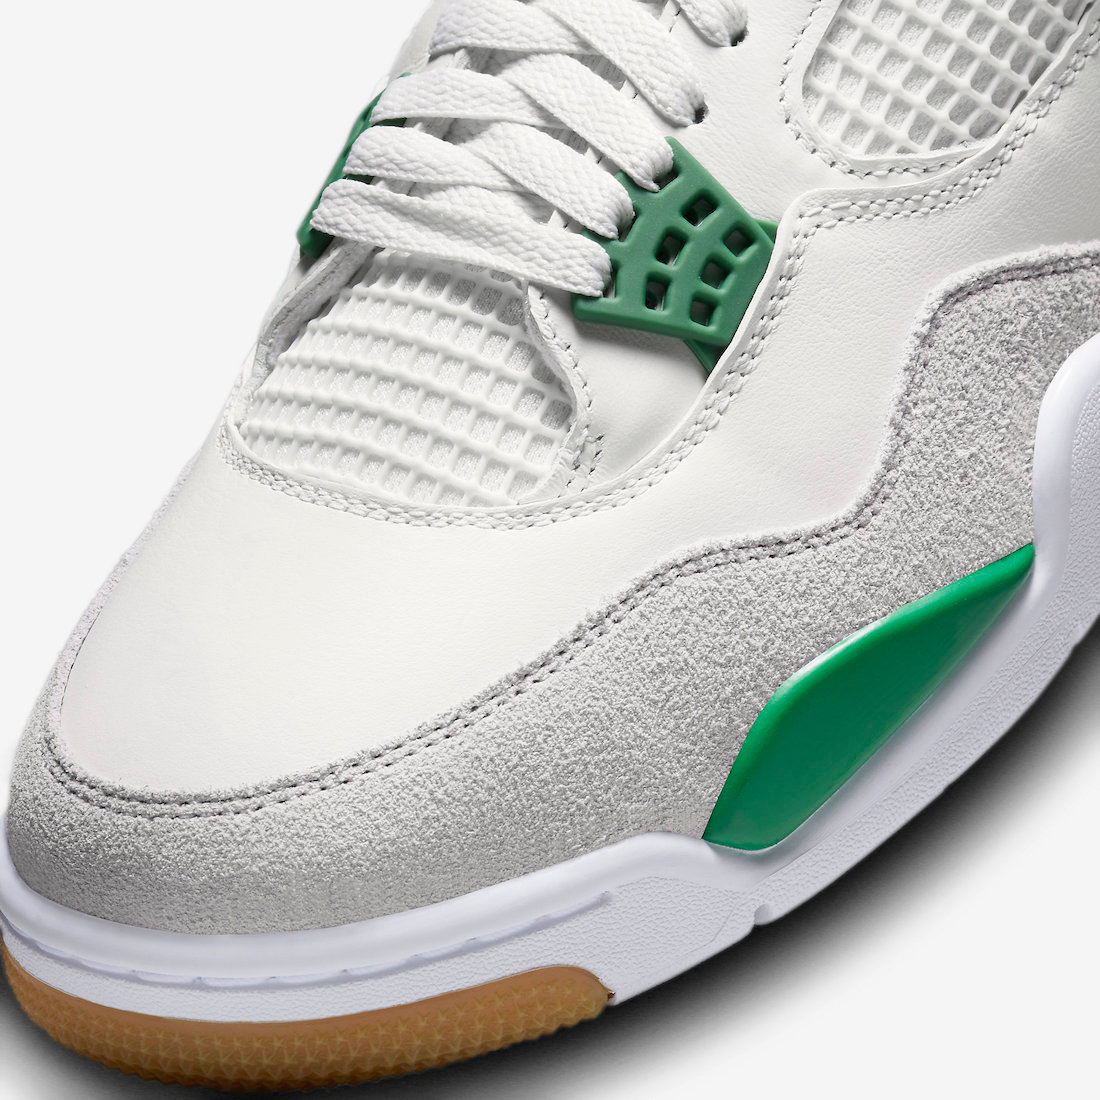 Nike-SB-Air-Jordan-4-Pine-Green-Where-to-Buy-7